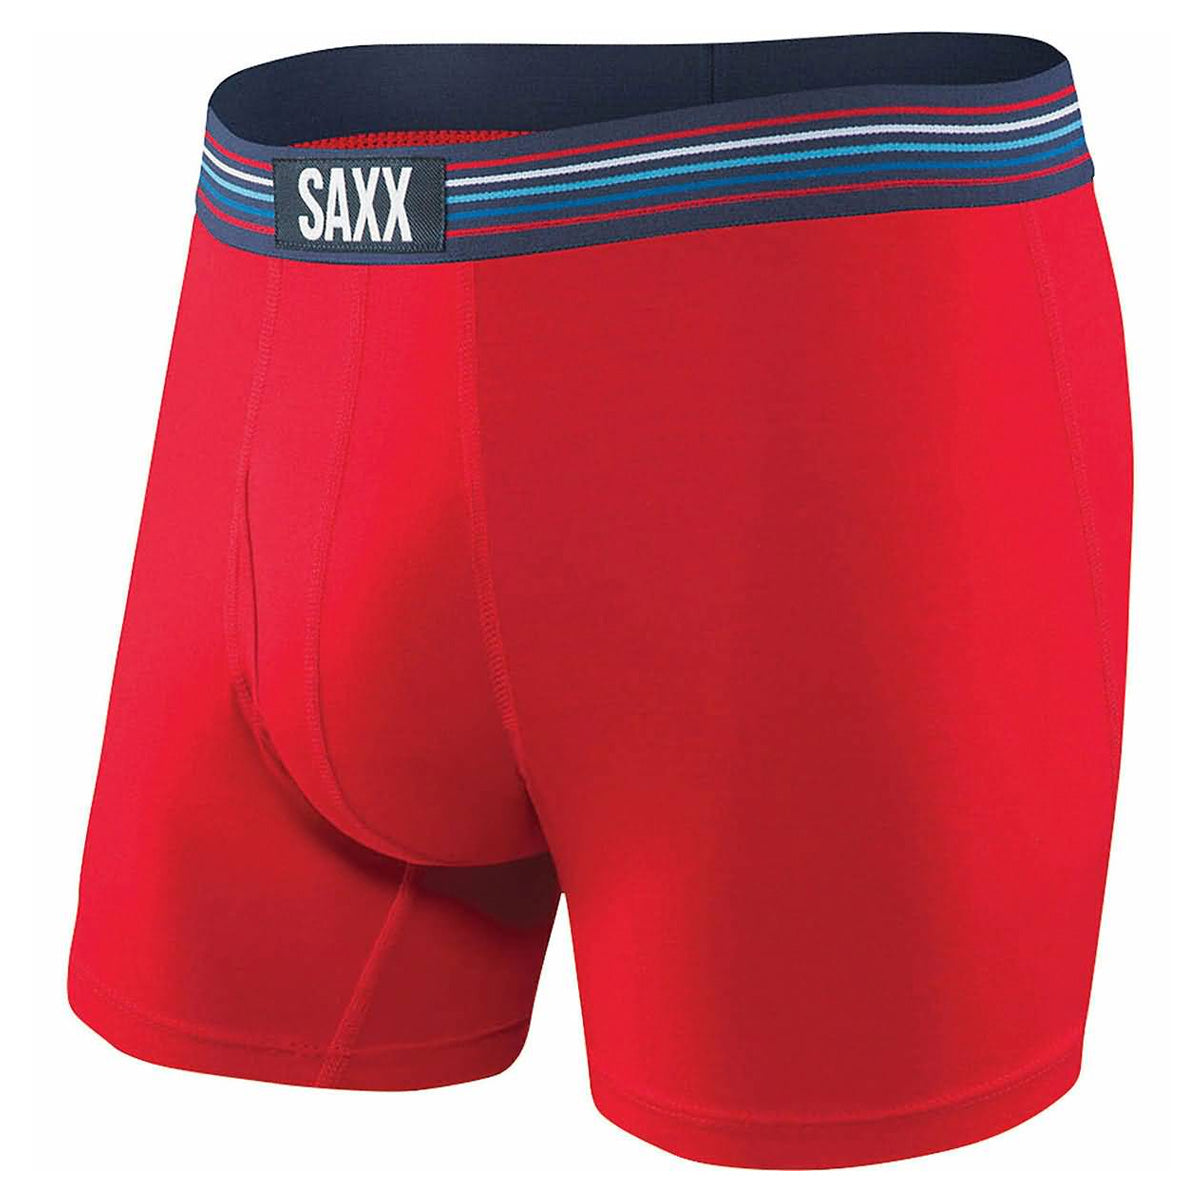 Saxx Ultra W/Fly Boxer Men's Bottom Underwear